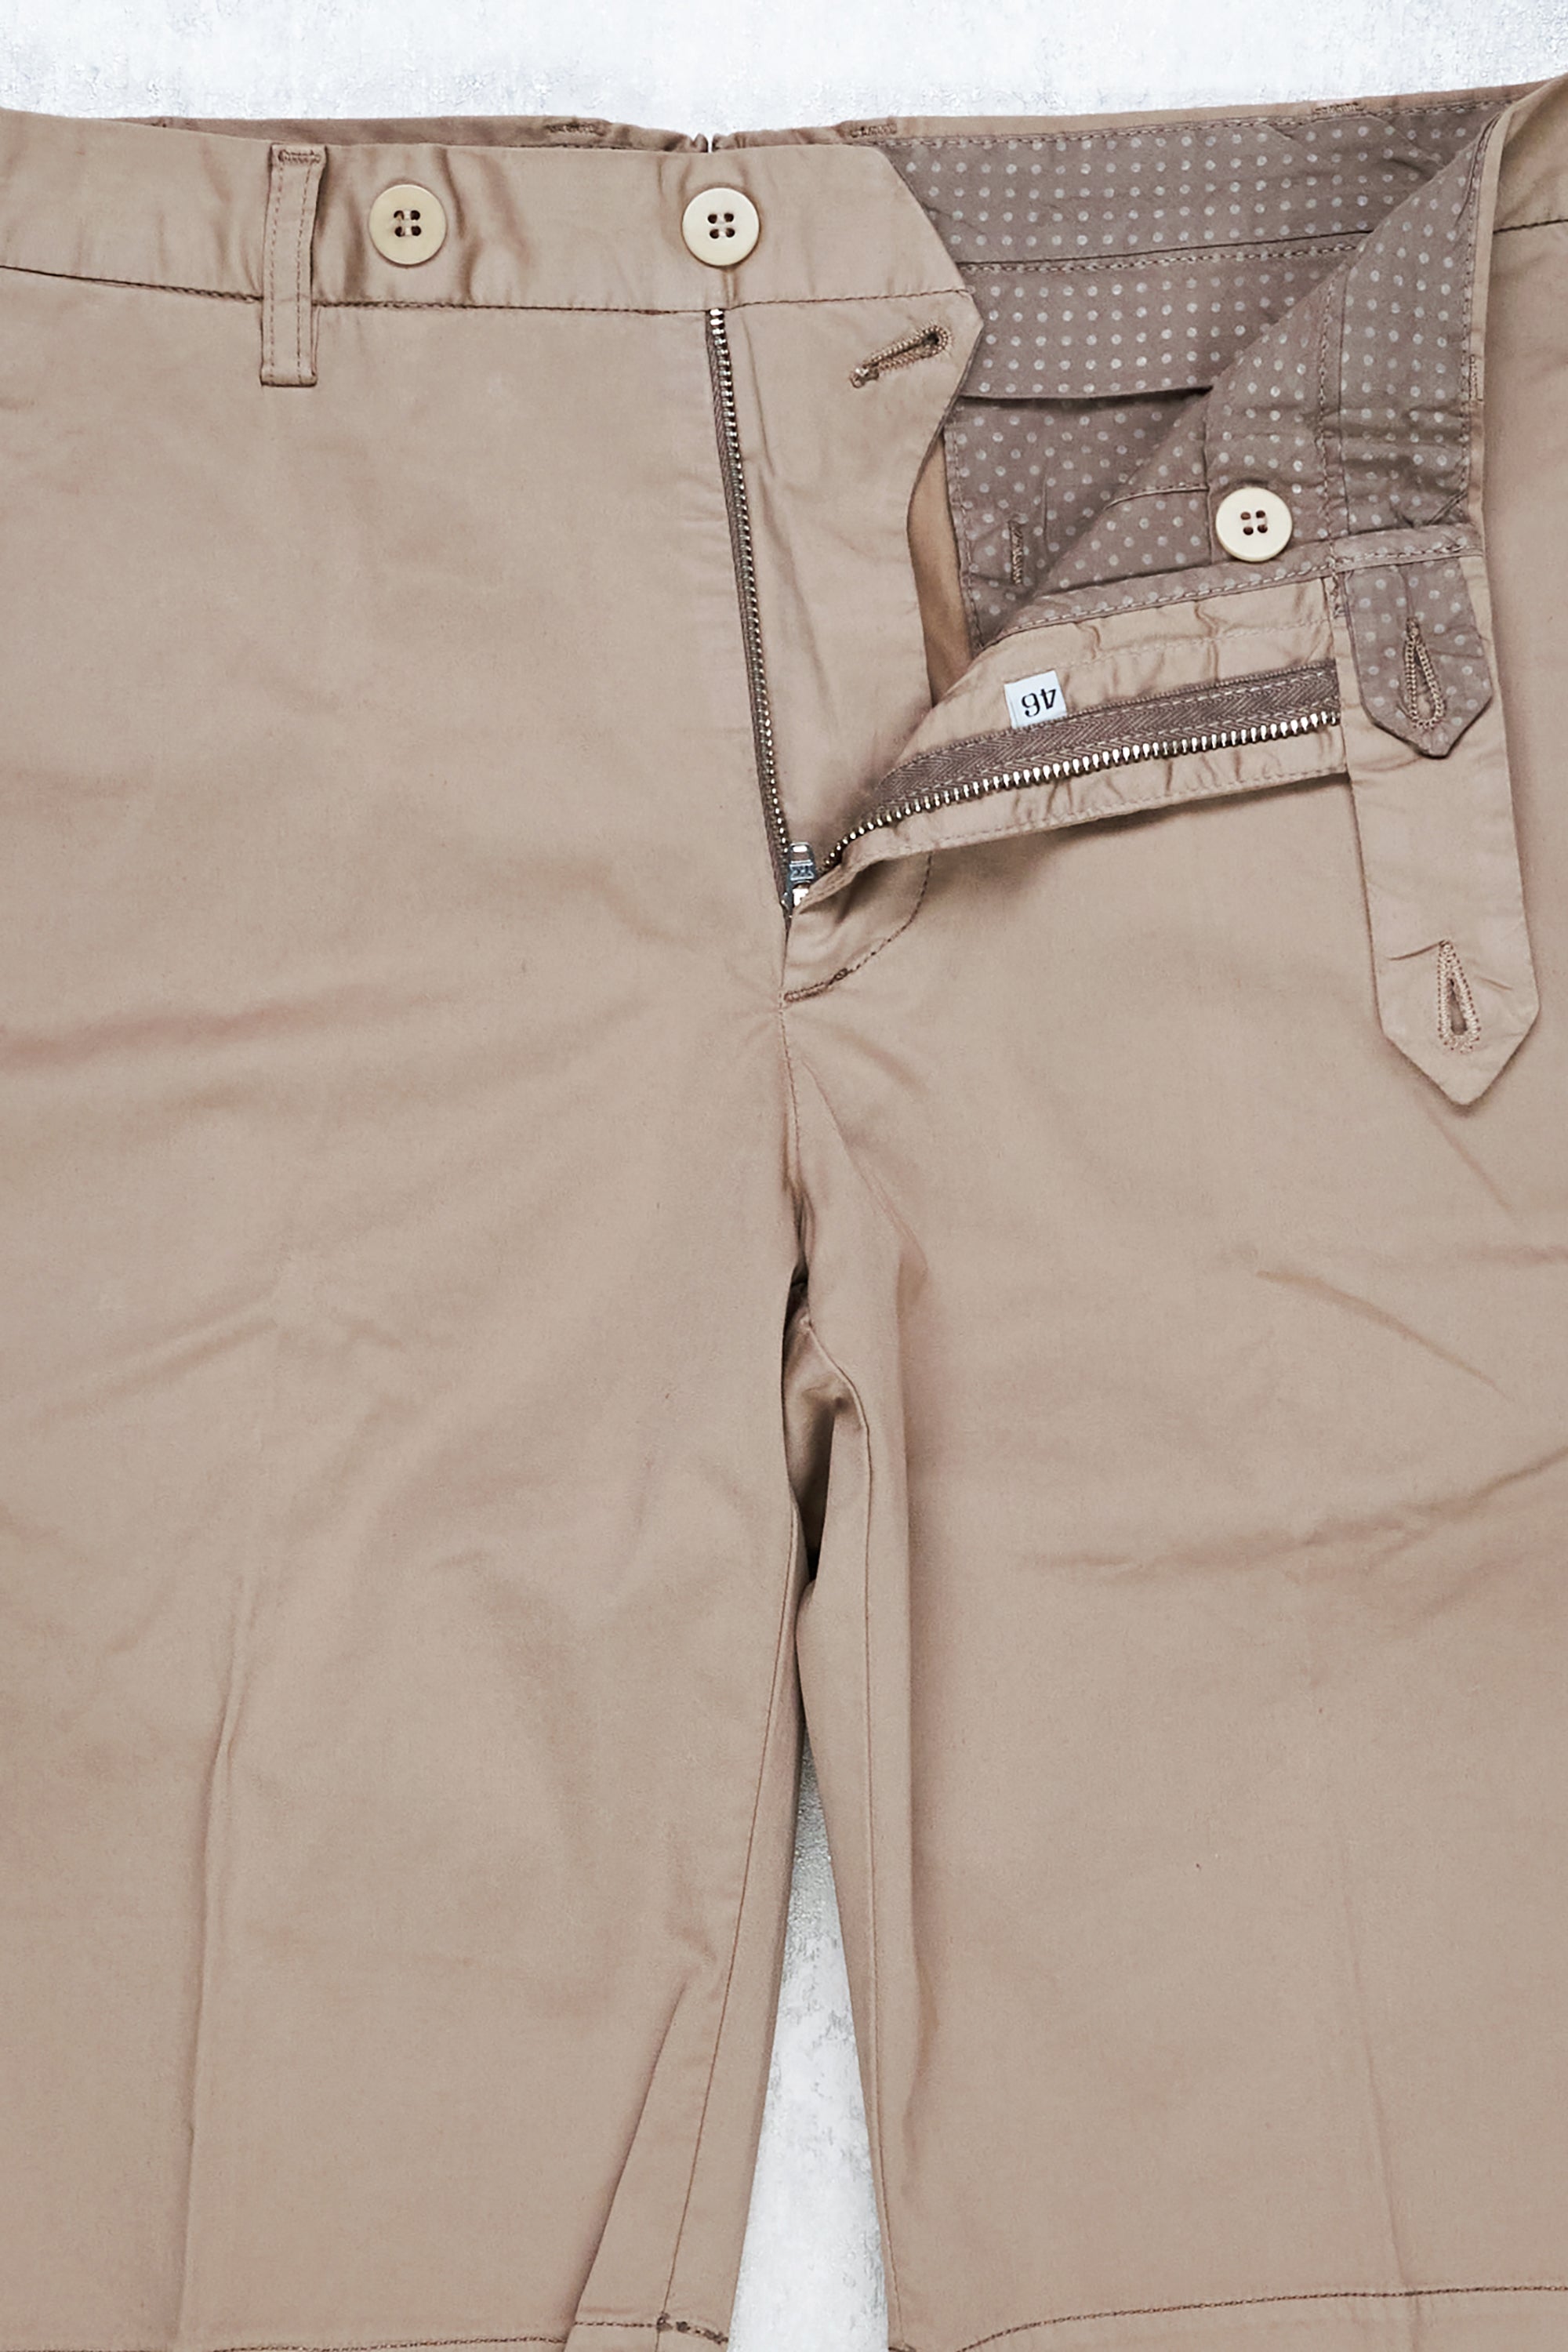 Rota	BE290/2 Brown Cotton Shorts